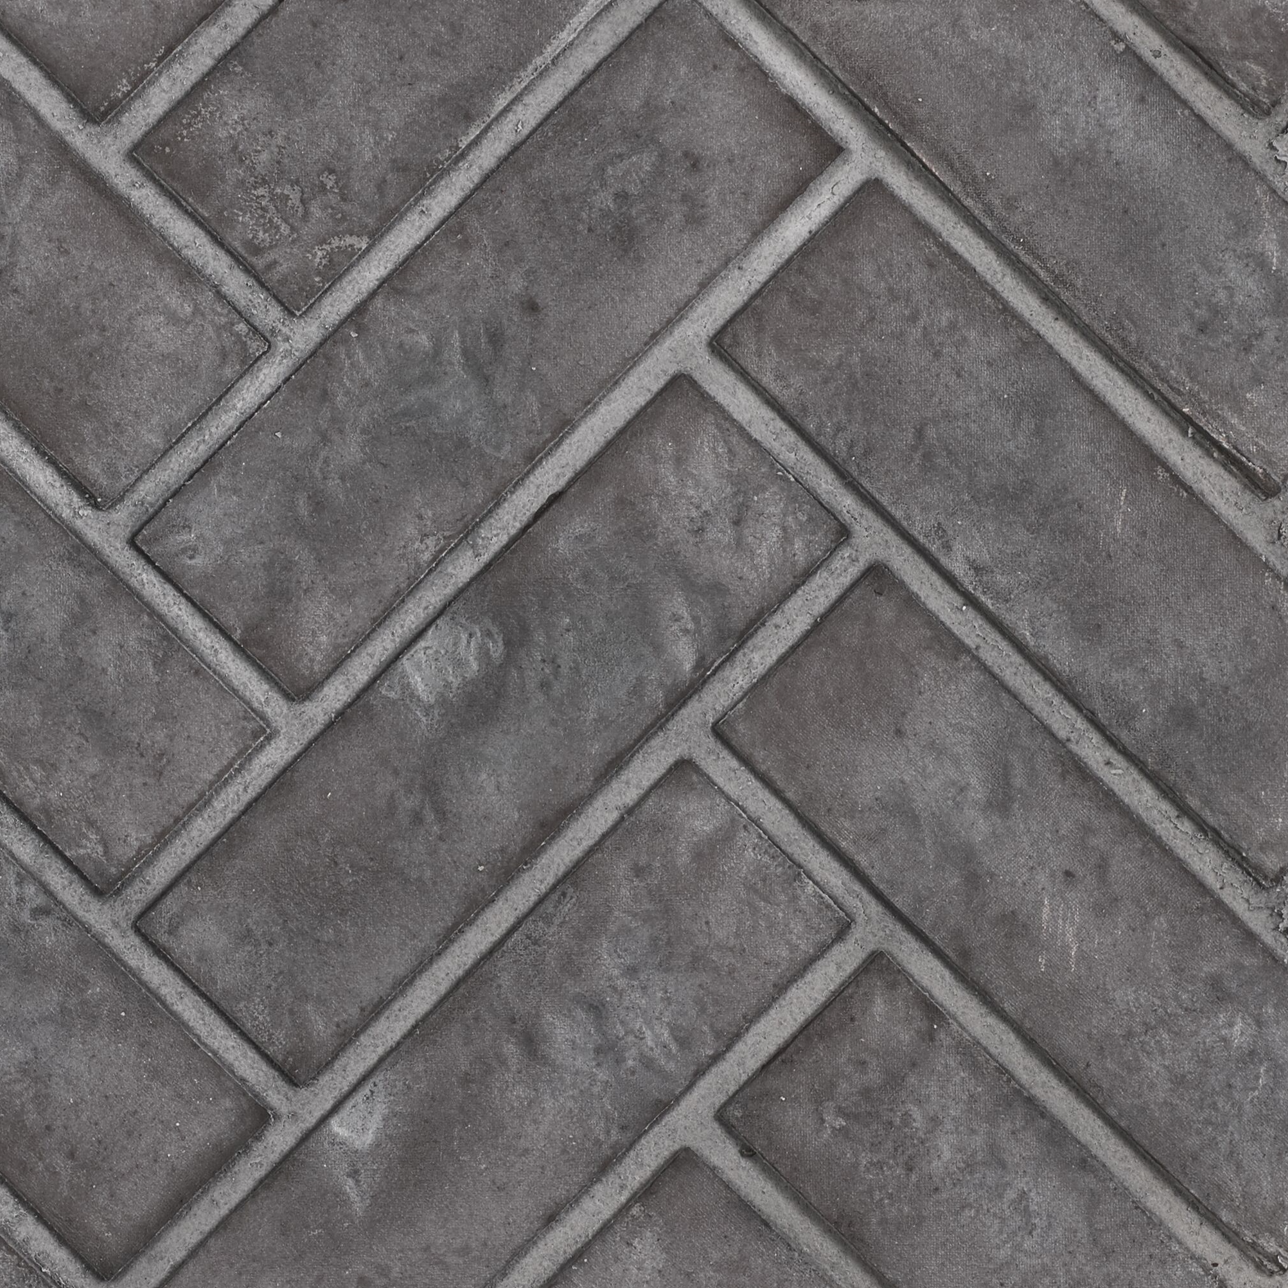 Napoleon Decorative Brick Panels Westminster Grey Herringbone - DBPEX42WH